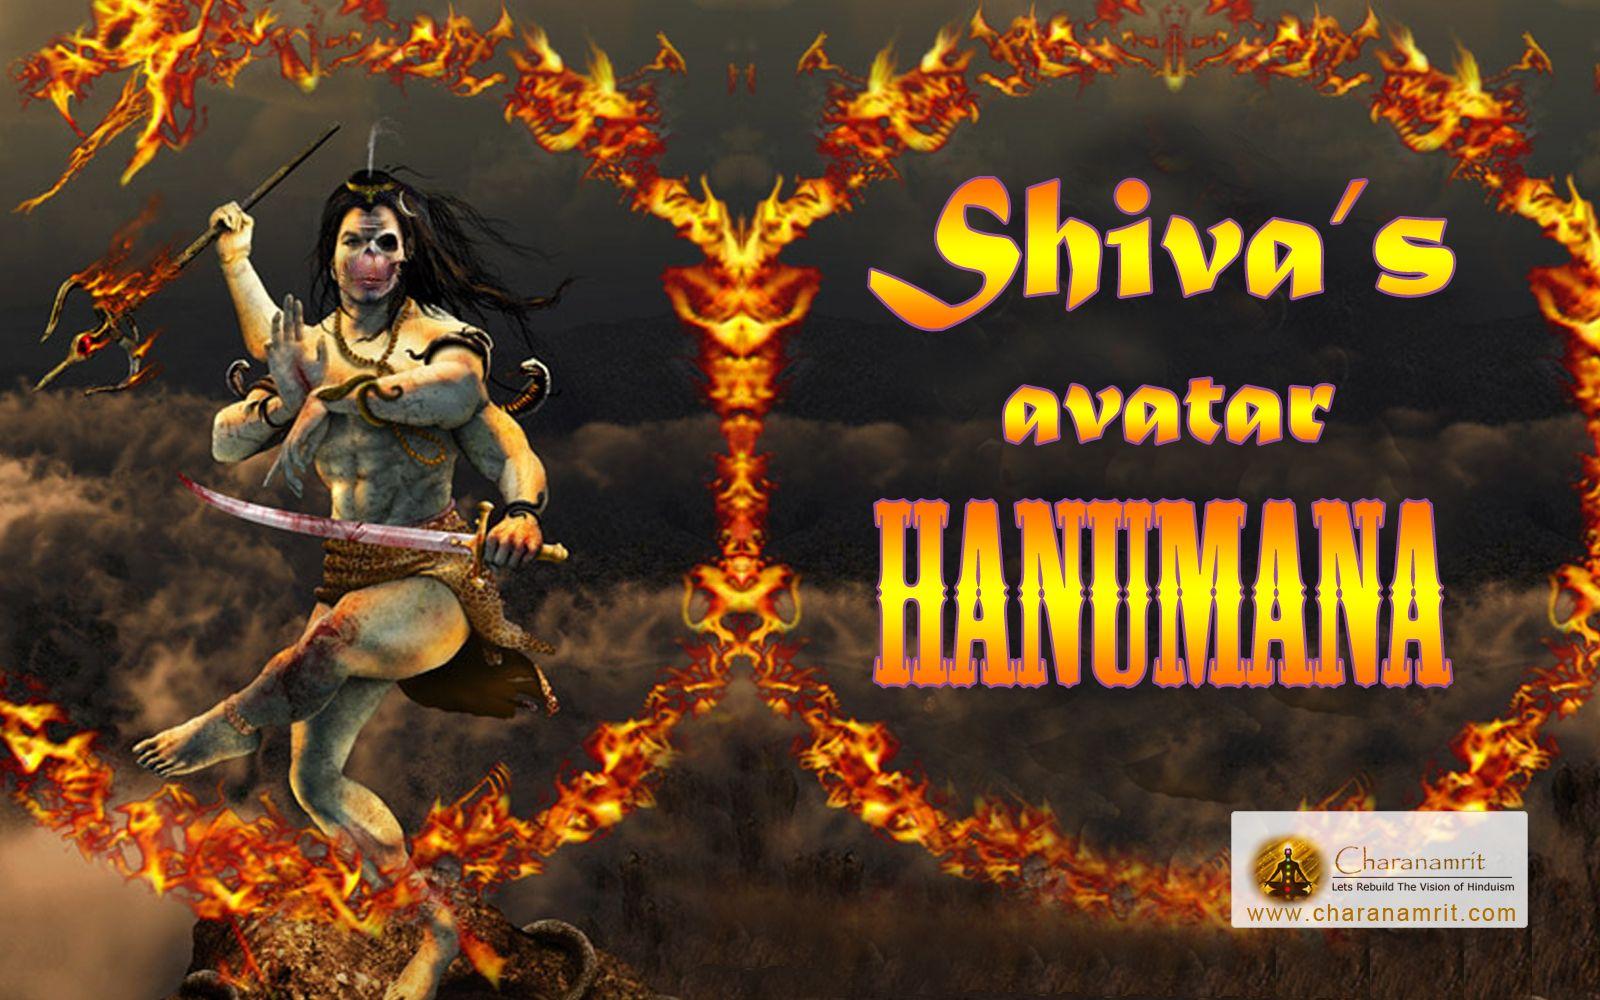 God Shiva's avatar Hanuman beautiful 3D HD Wallpaper for free